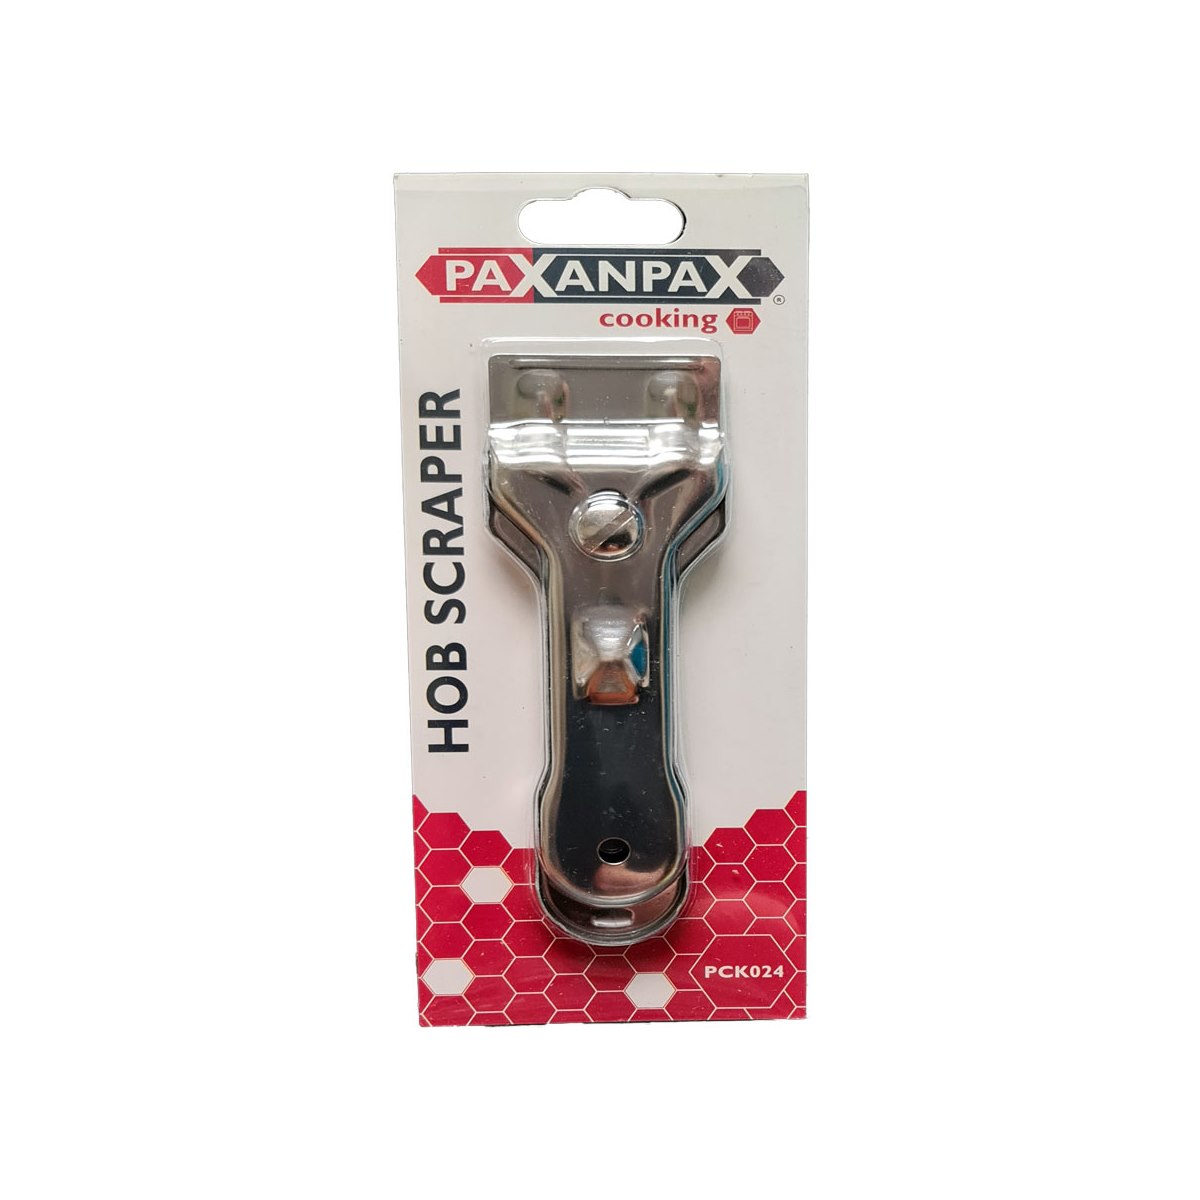 Paxanpax Universal Ceramic Hob Scraper